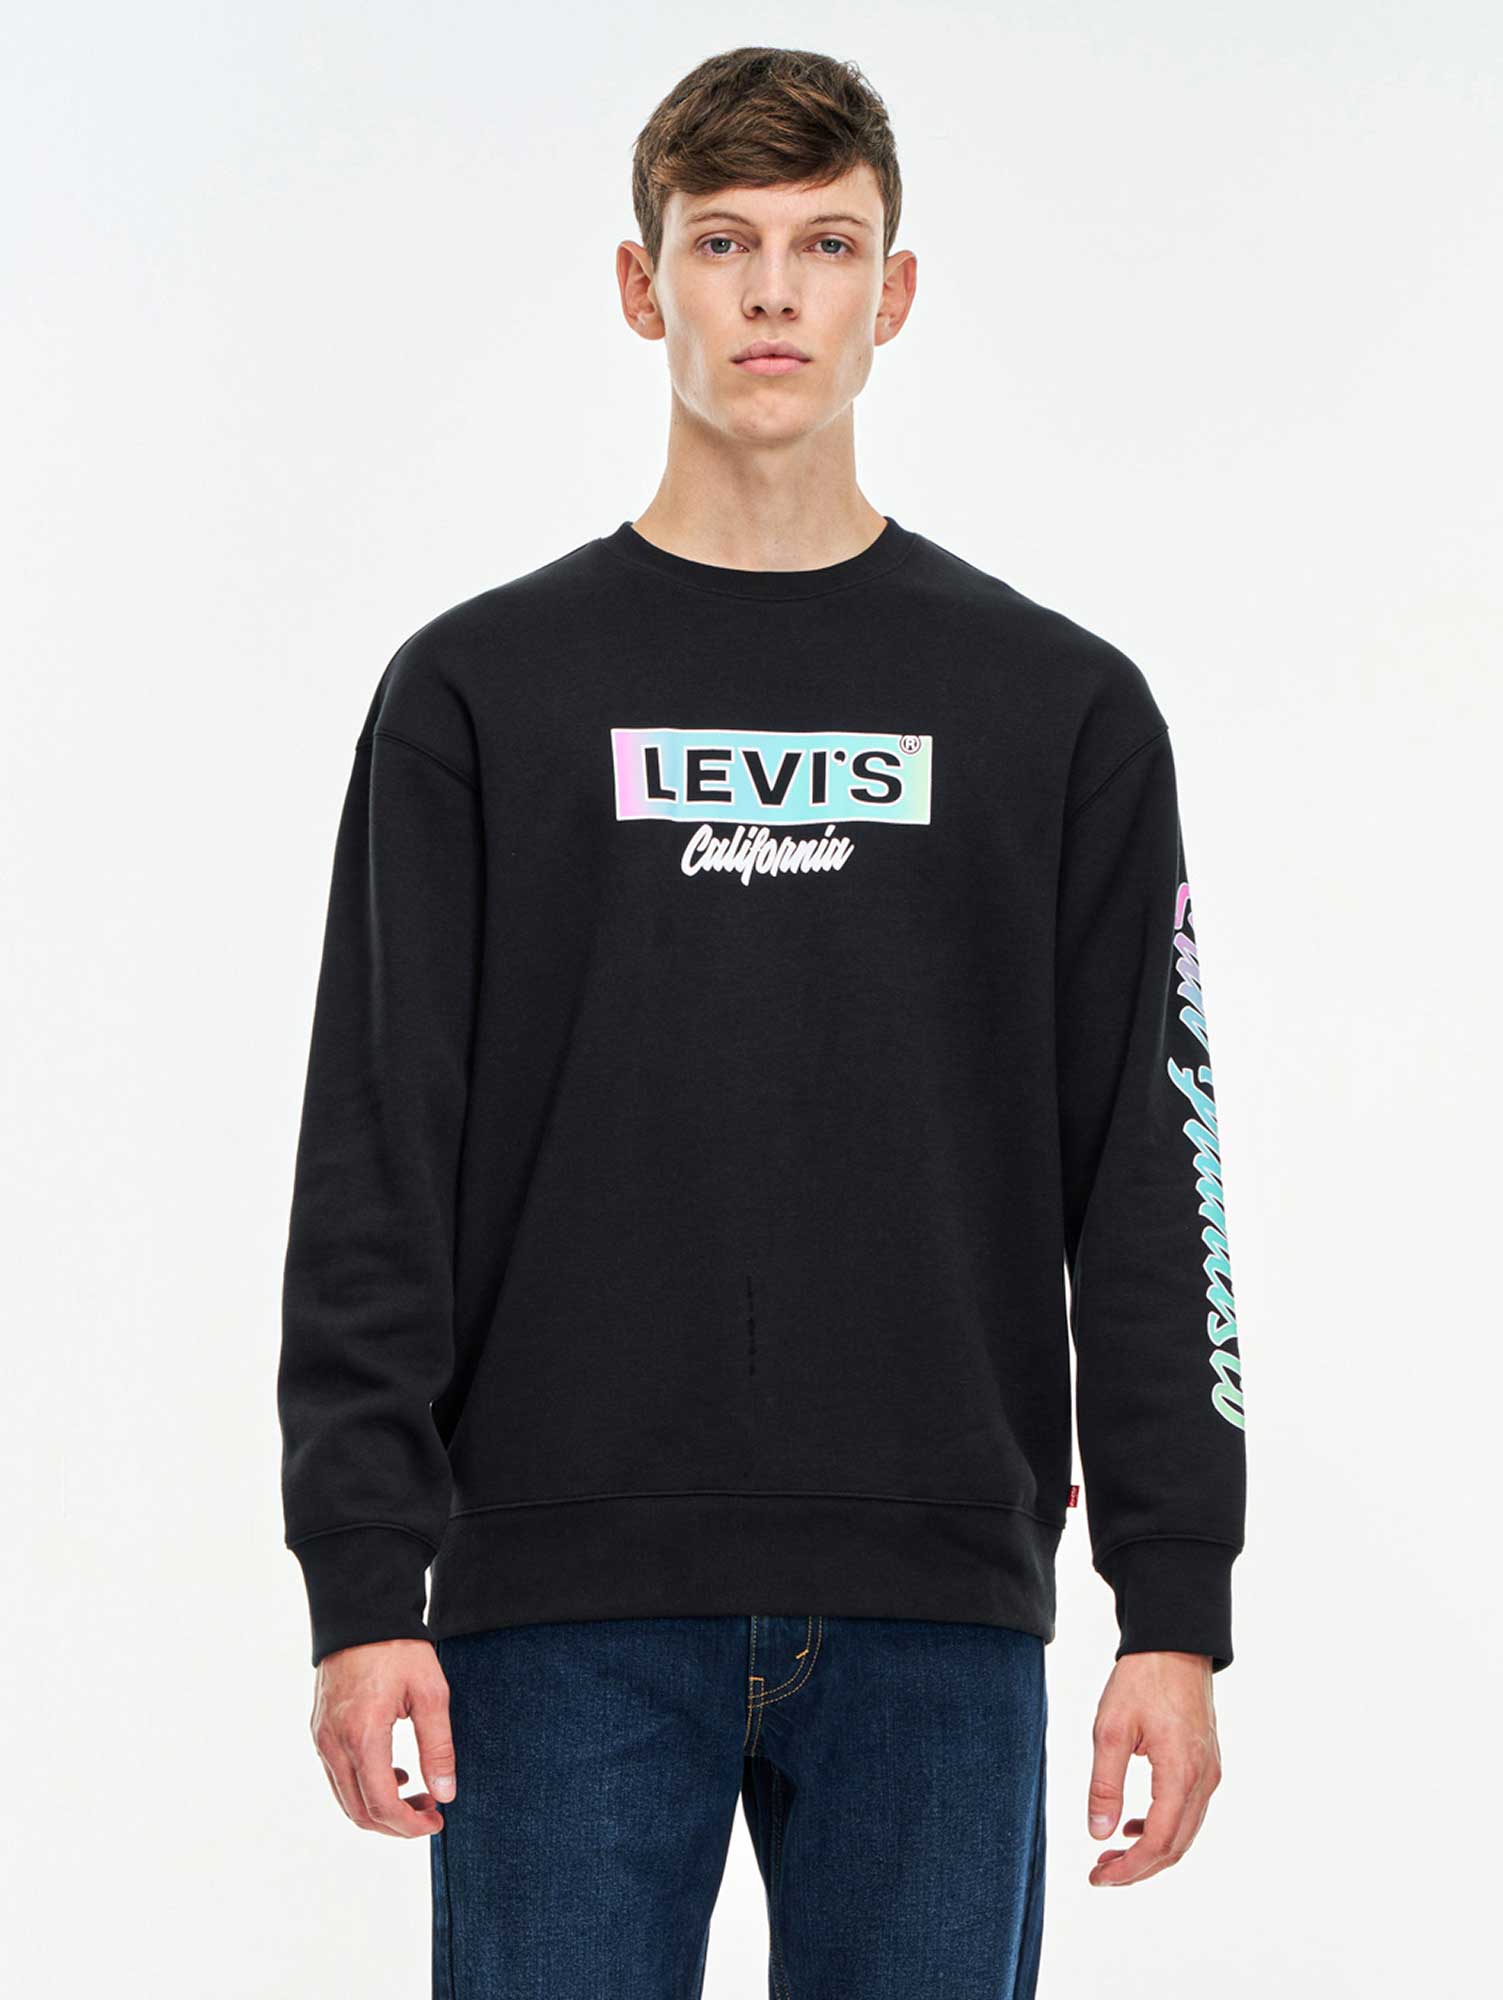 Levi’s-Models-02